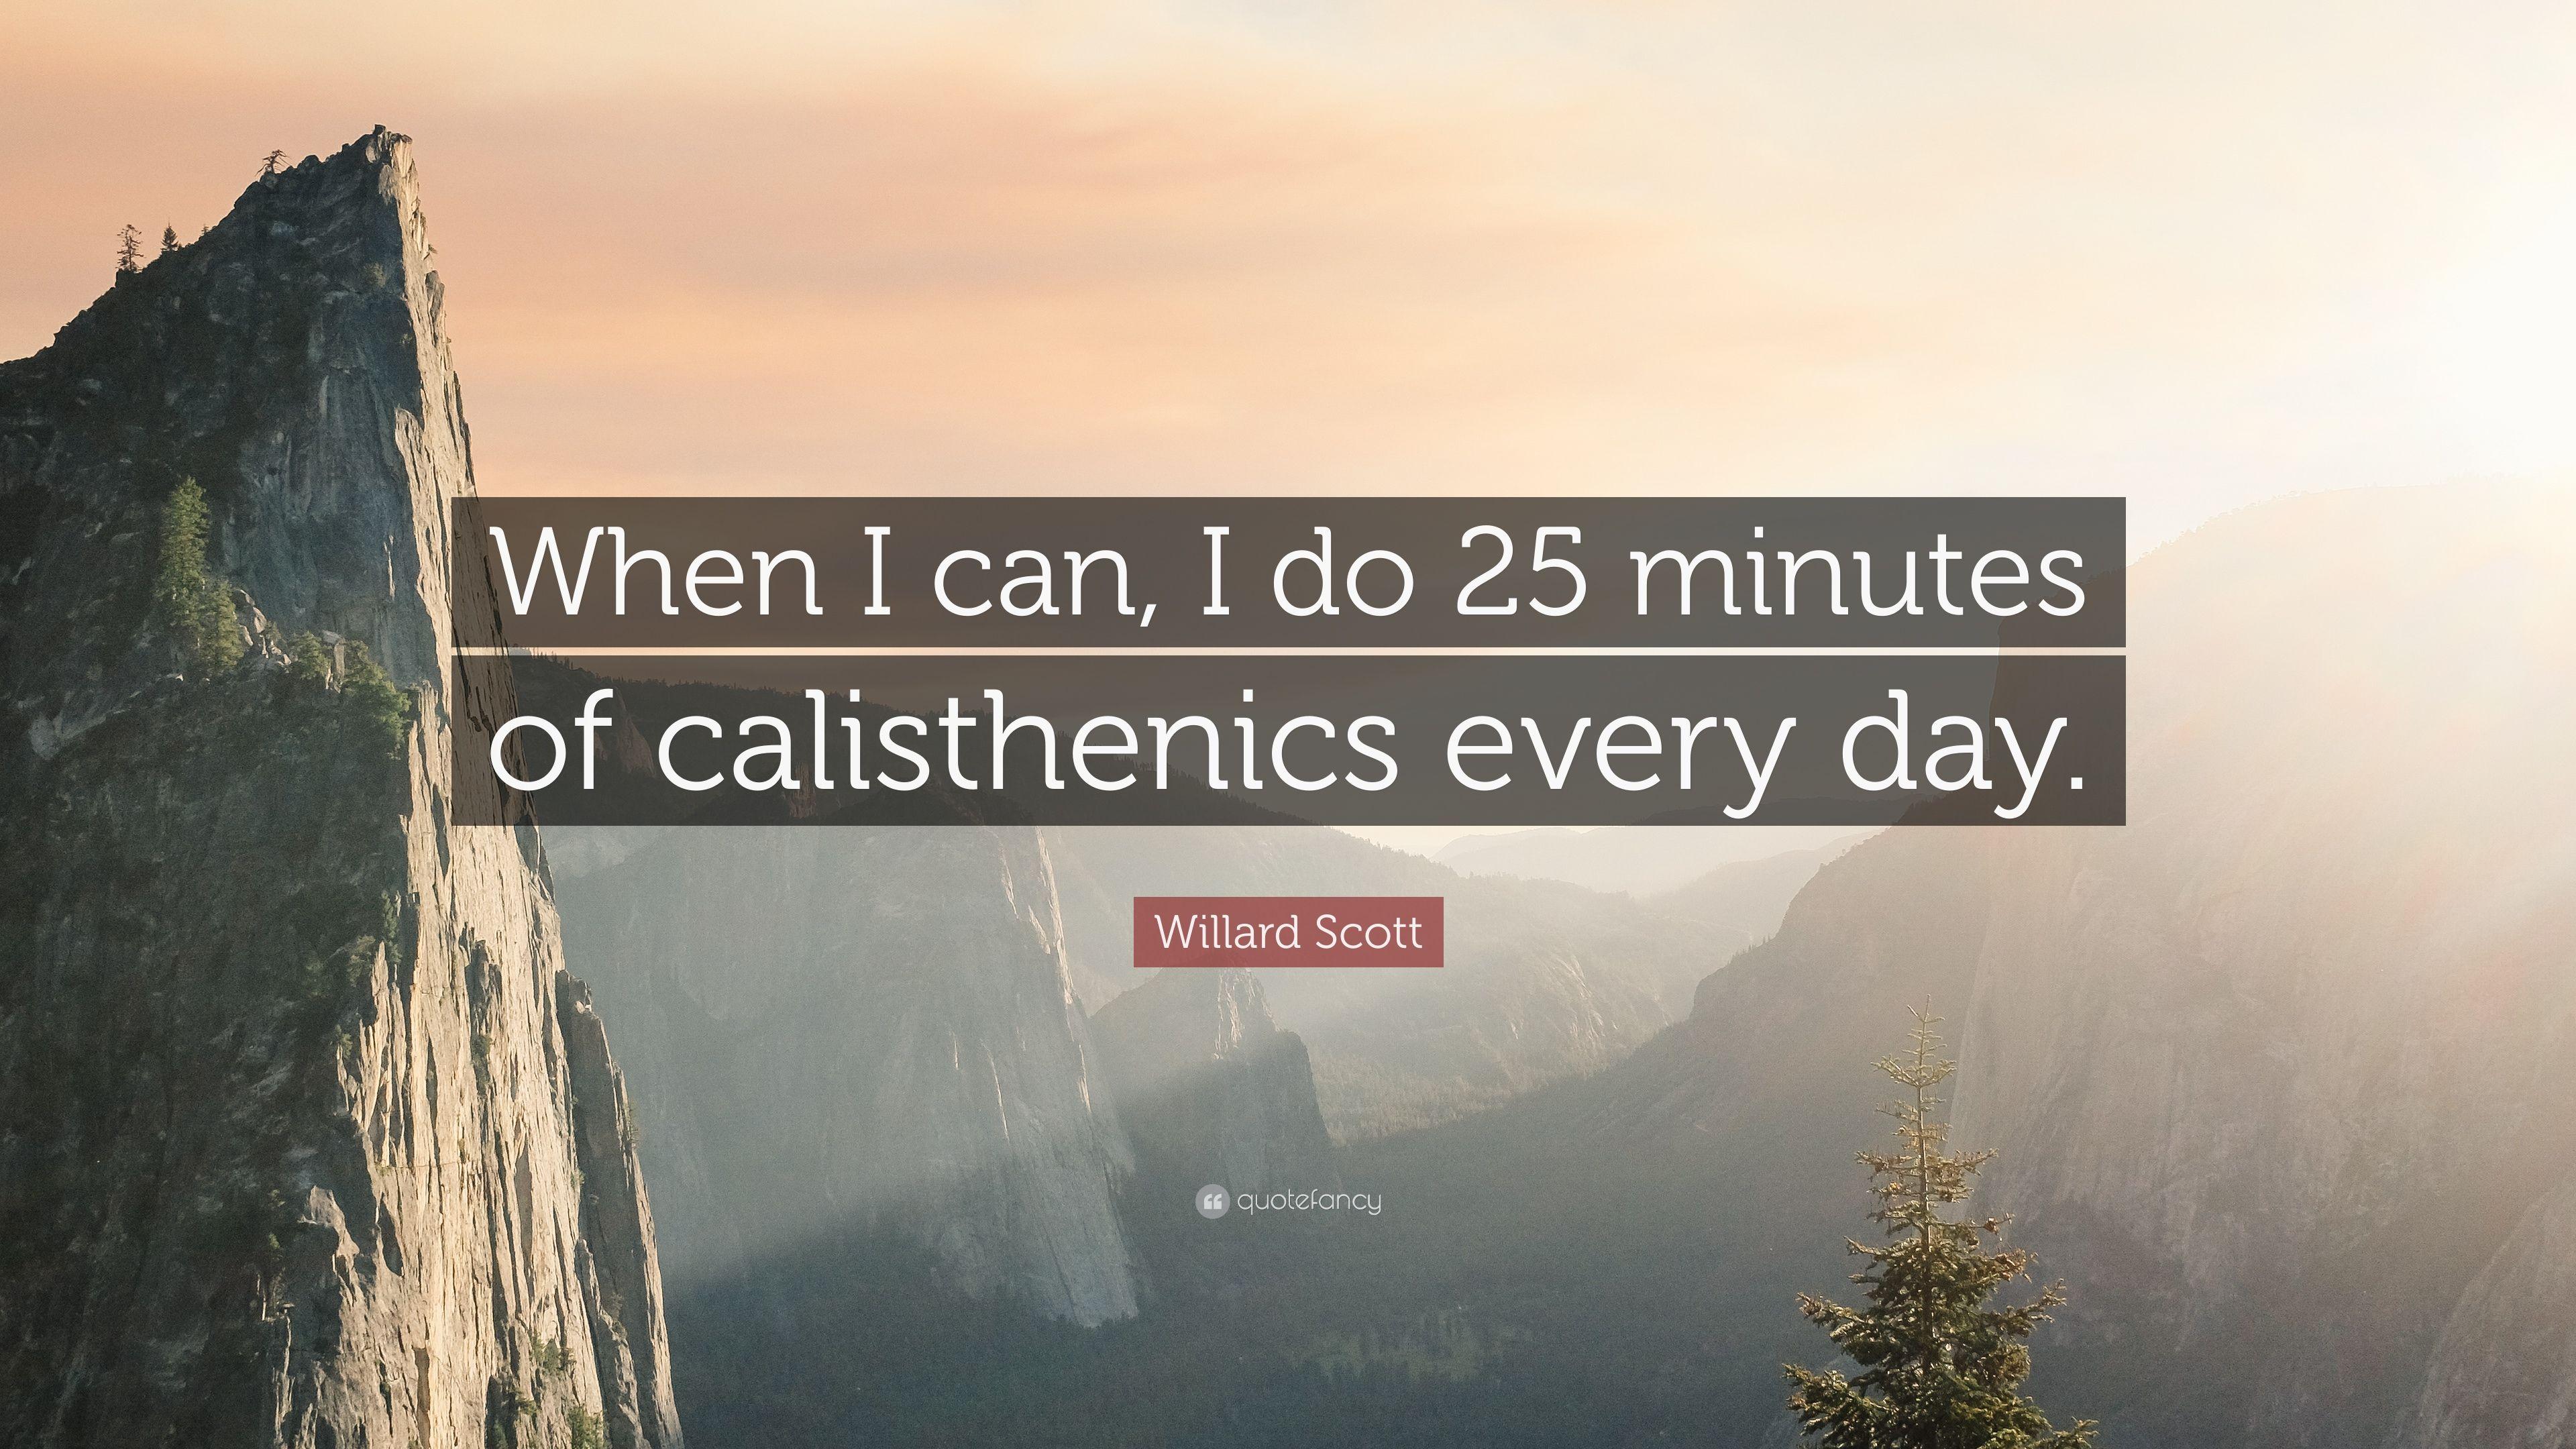 Willard Scott Quote: “When I can, I do 25 minutes of calisthenics